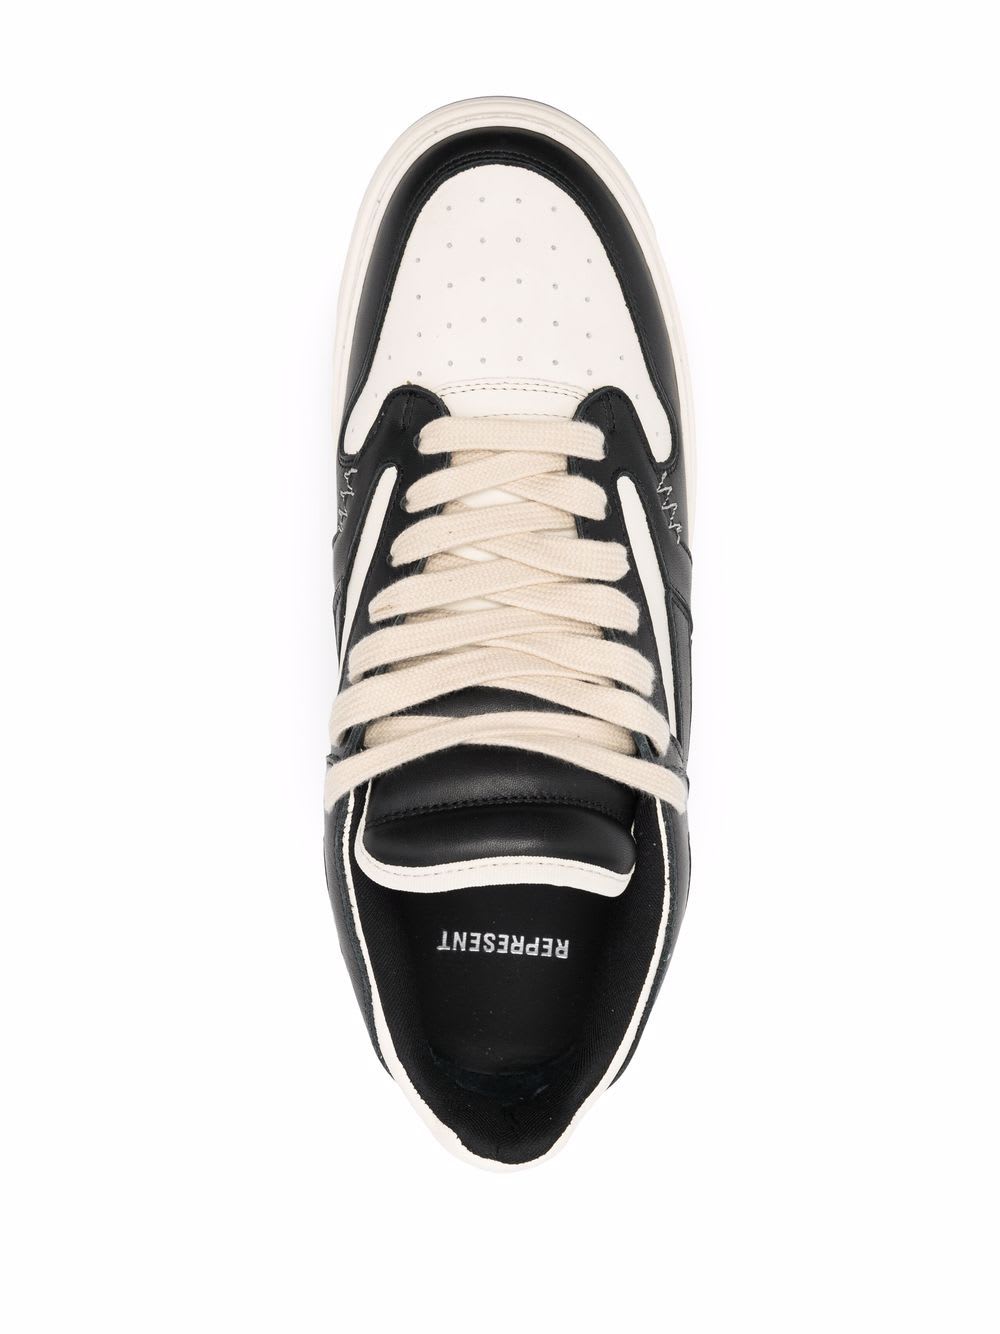 Shop Represent Reptor Low Sneakers In Black Vintage White